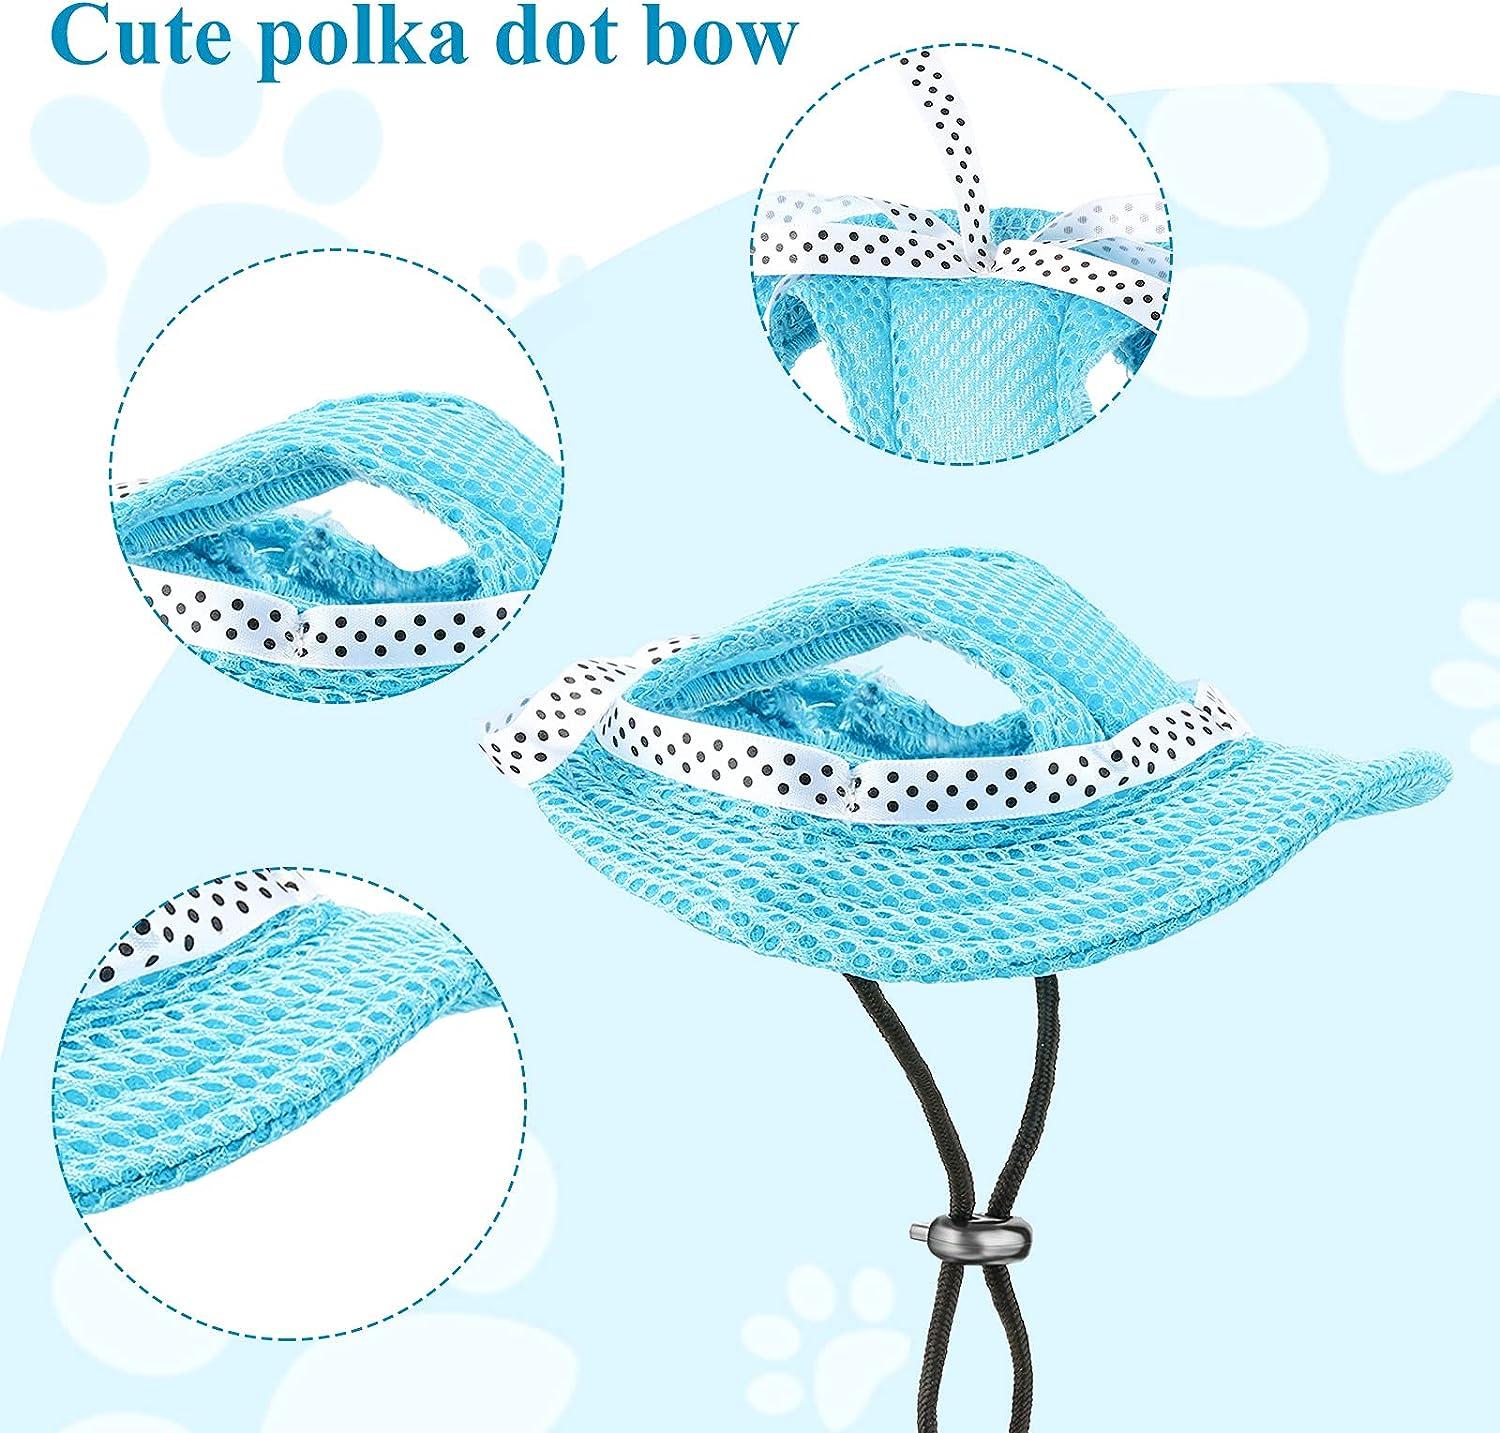 Polka Dot Bow Baseball Hat